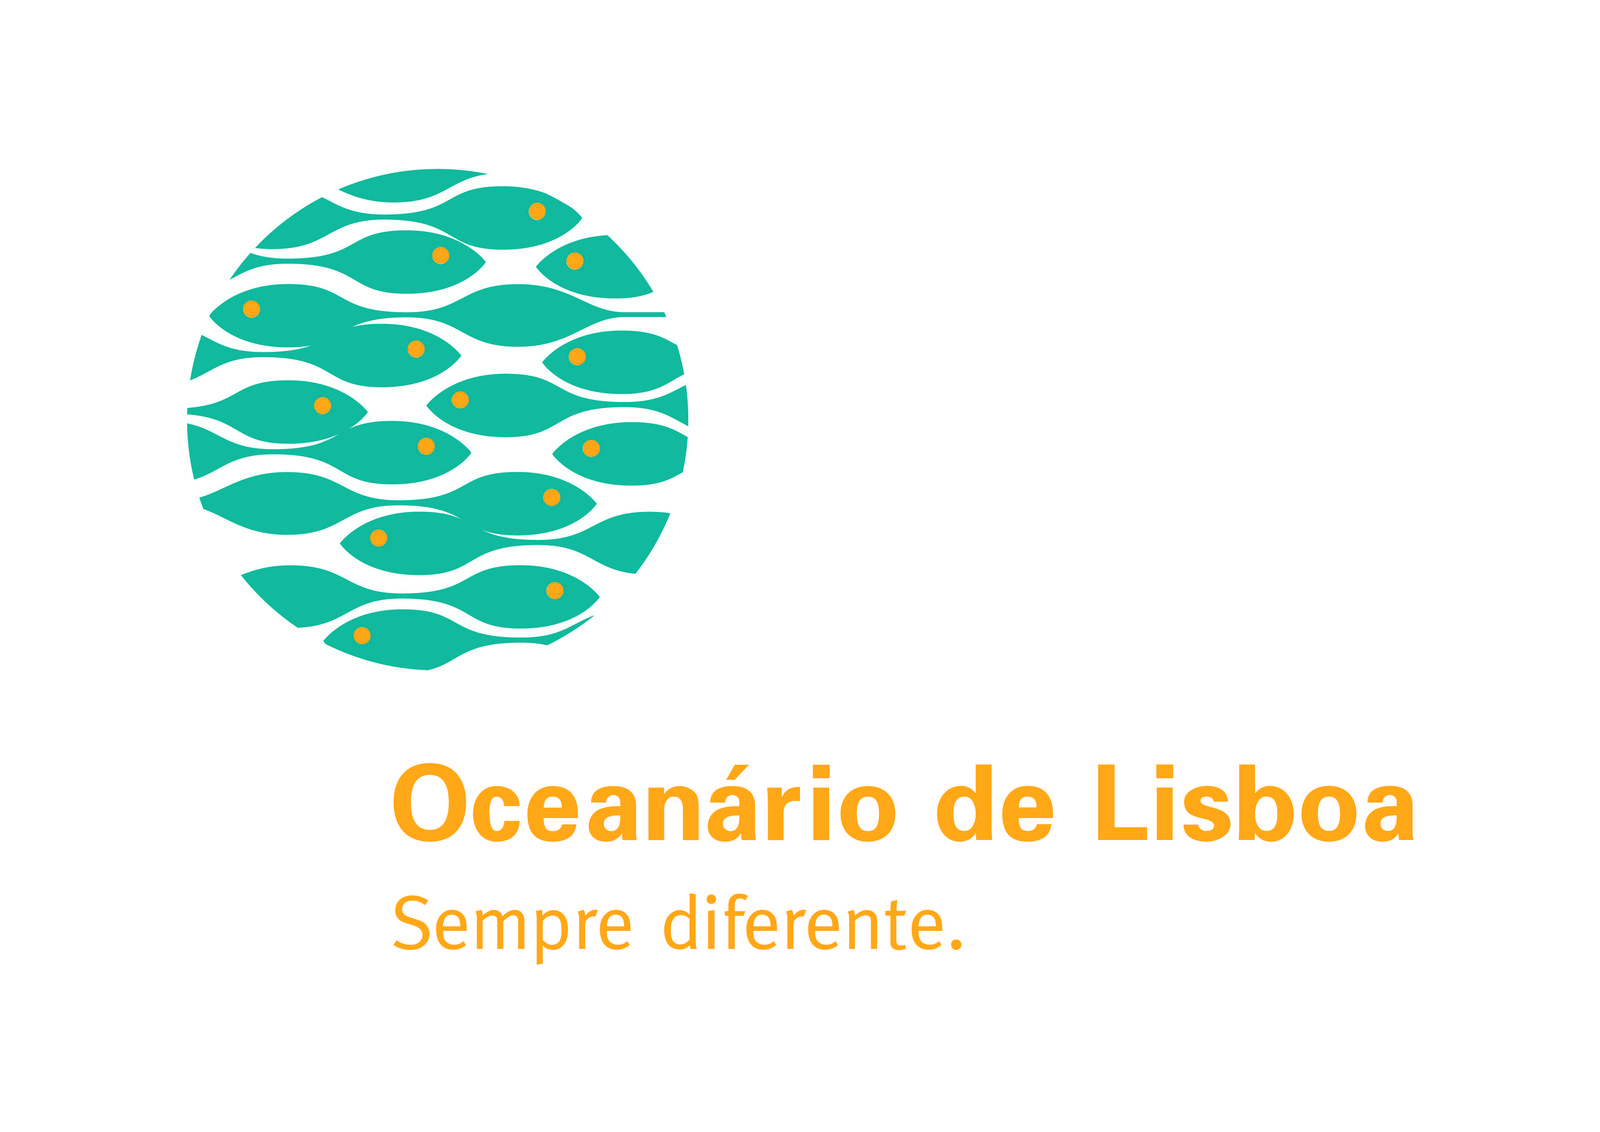 Oceanario of Lisbon